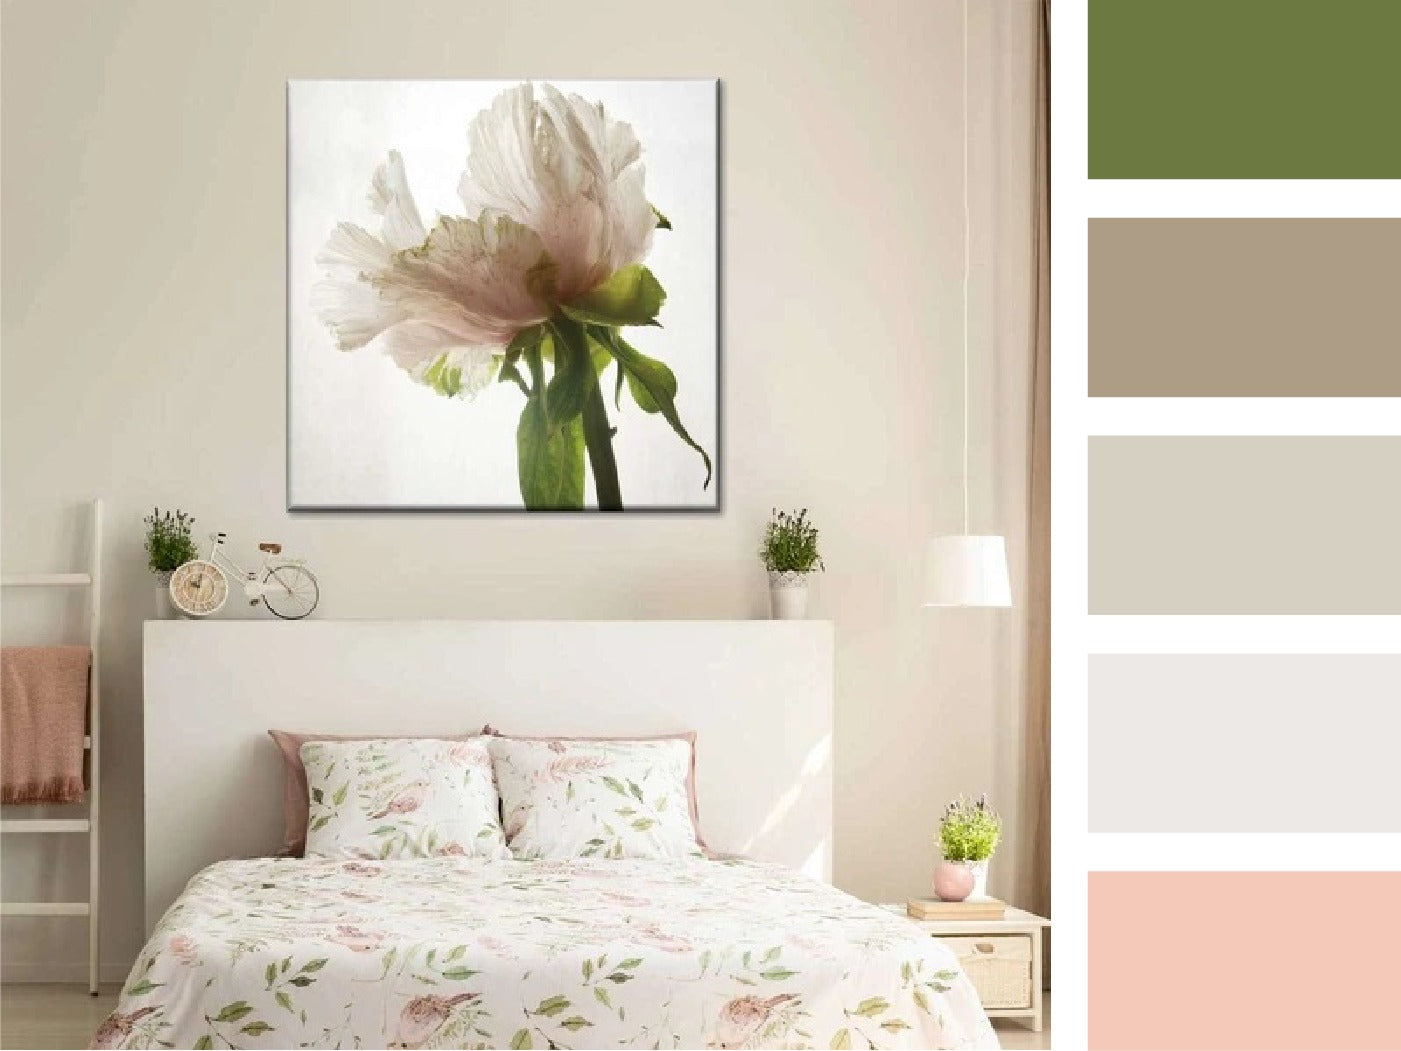 25 Pastel Room Ideas - Rooms Using Pastel Color Schemes